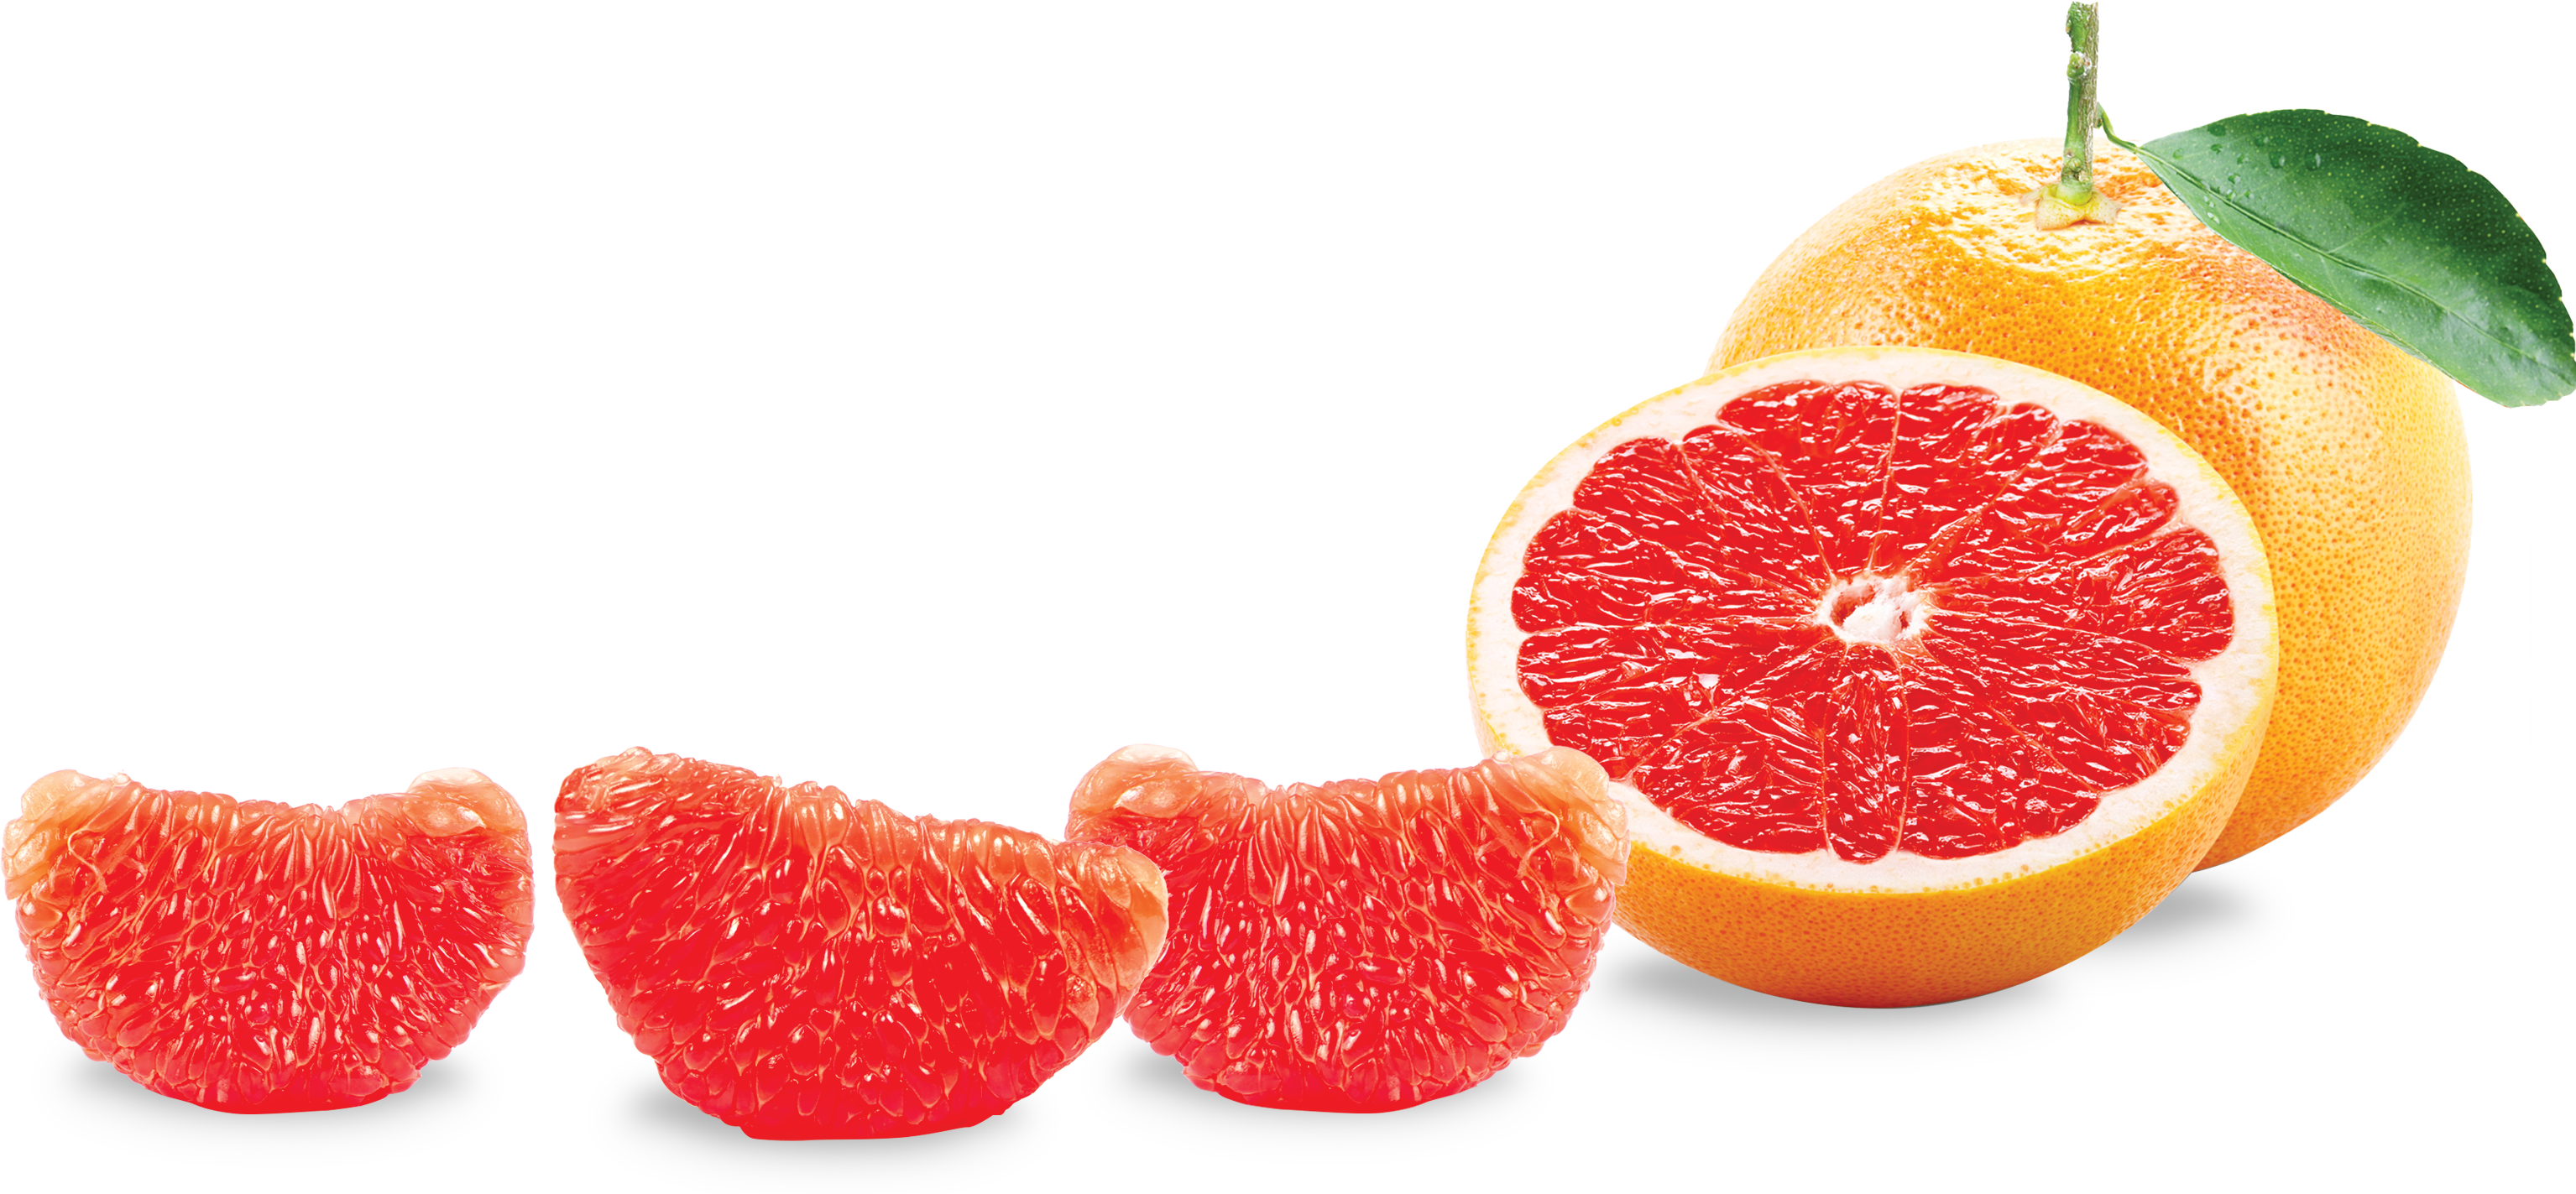 Grapefruit Download PNG Image